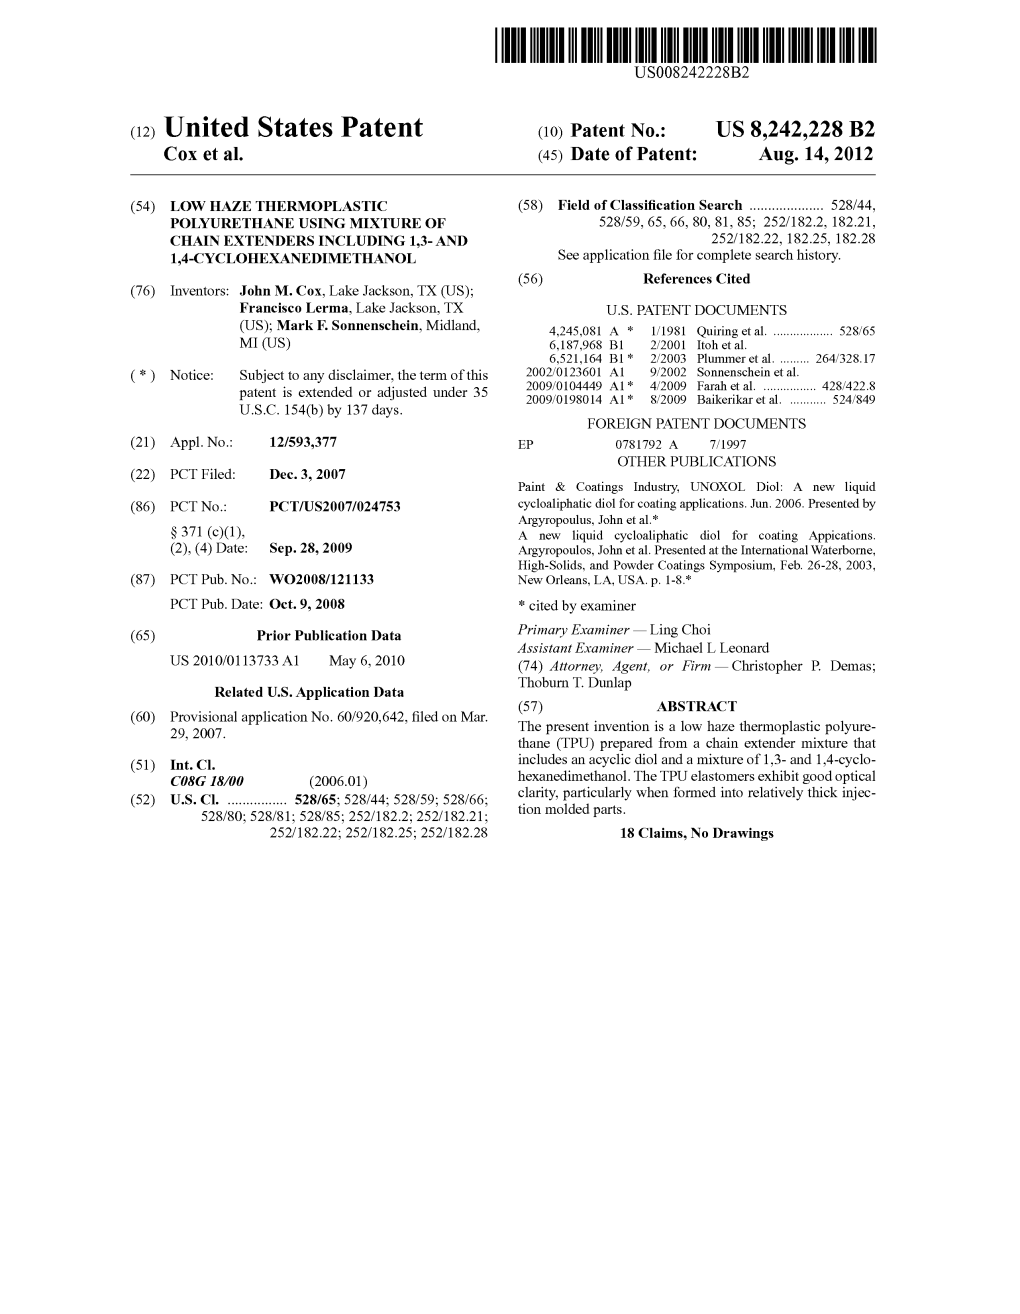 (12) United States Patent (10) Patent No.: US 8,242.228 B2 Cox Et Al